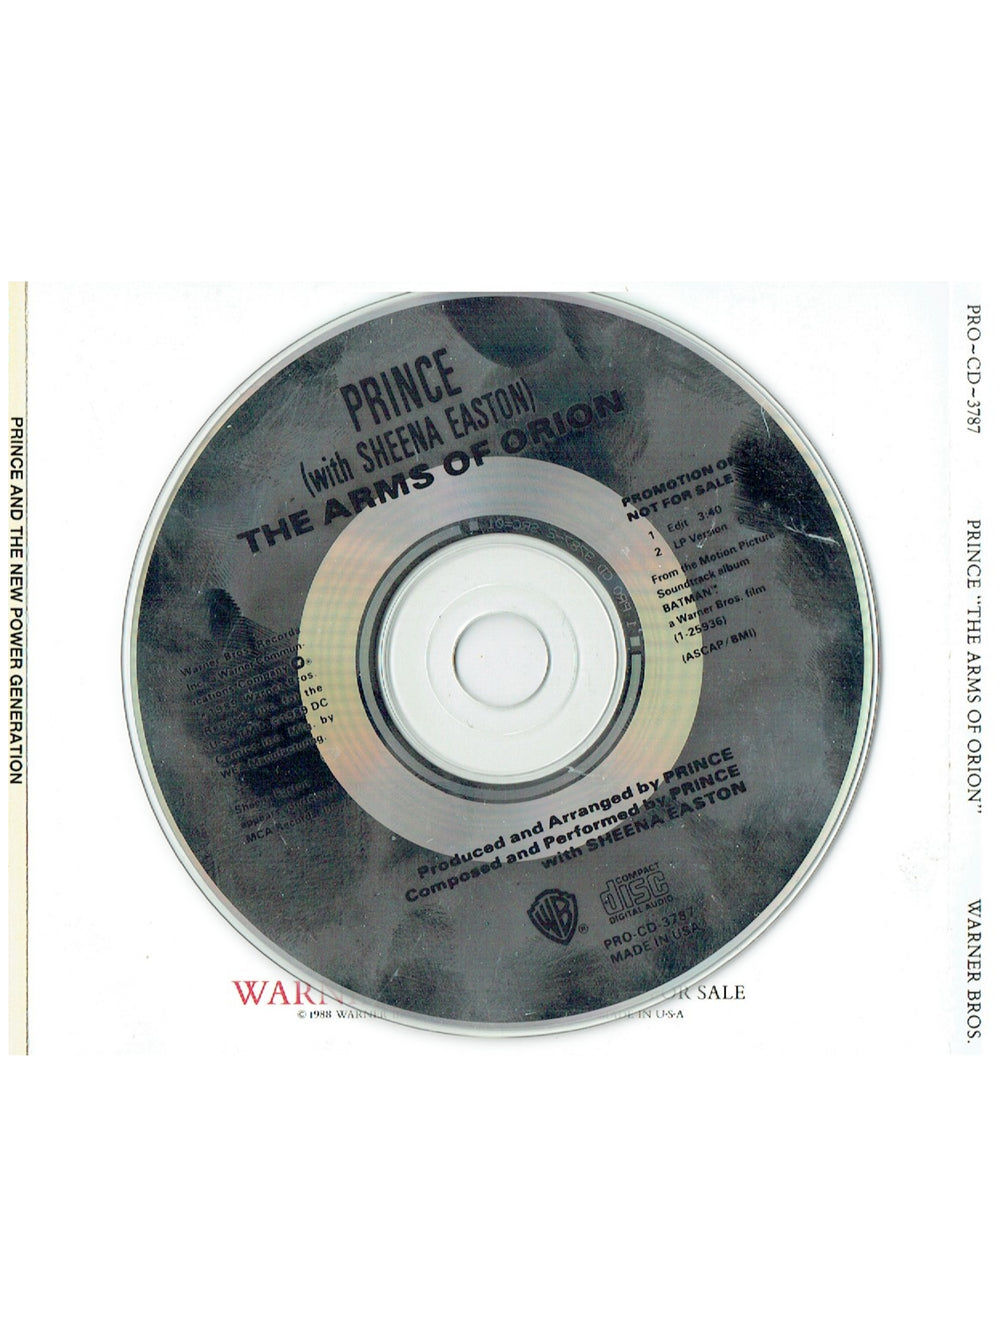 Prince – & Sheena Easton The Arms Of Orion CD Single Promo US Preloved: 1989